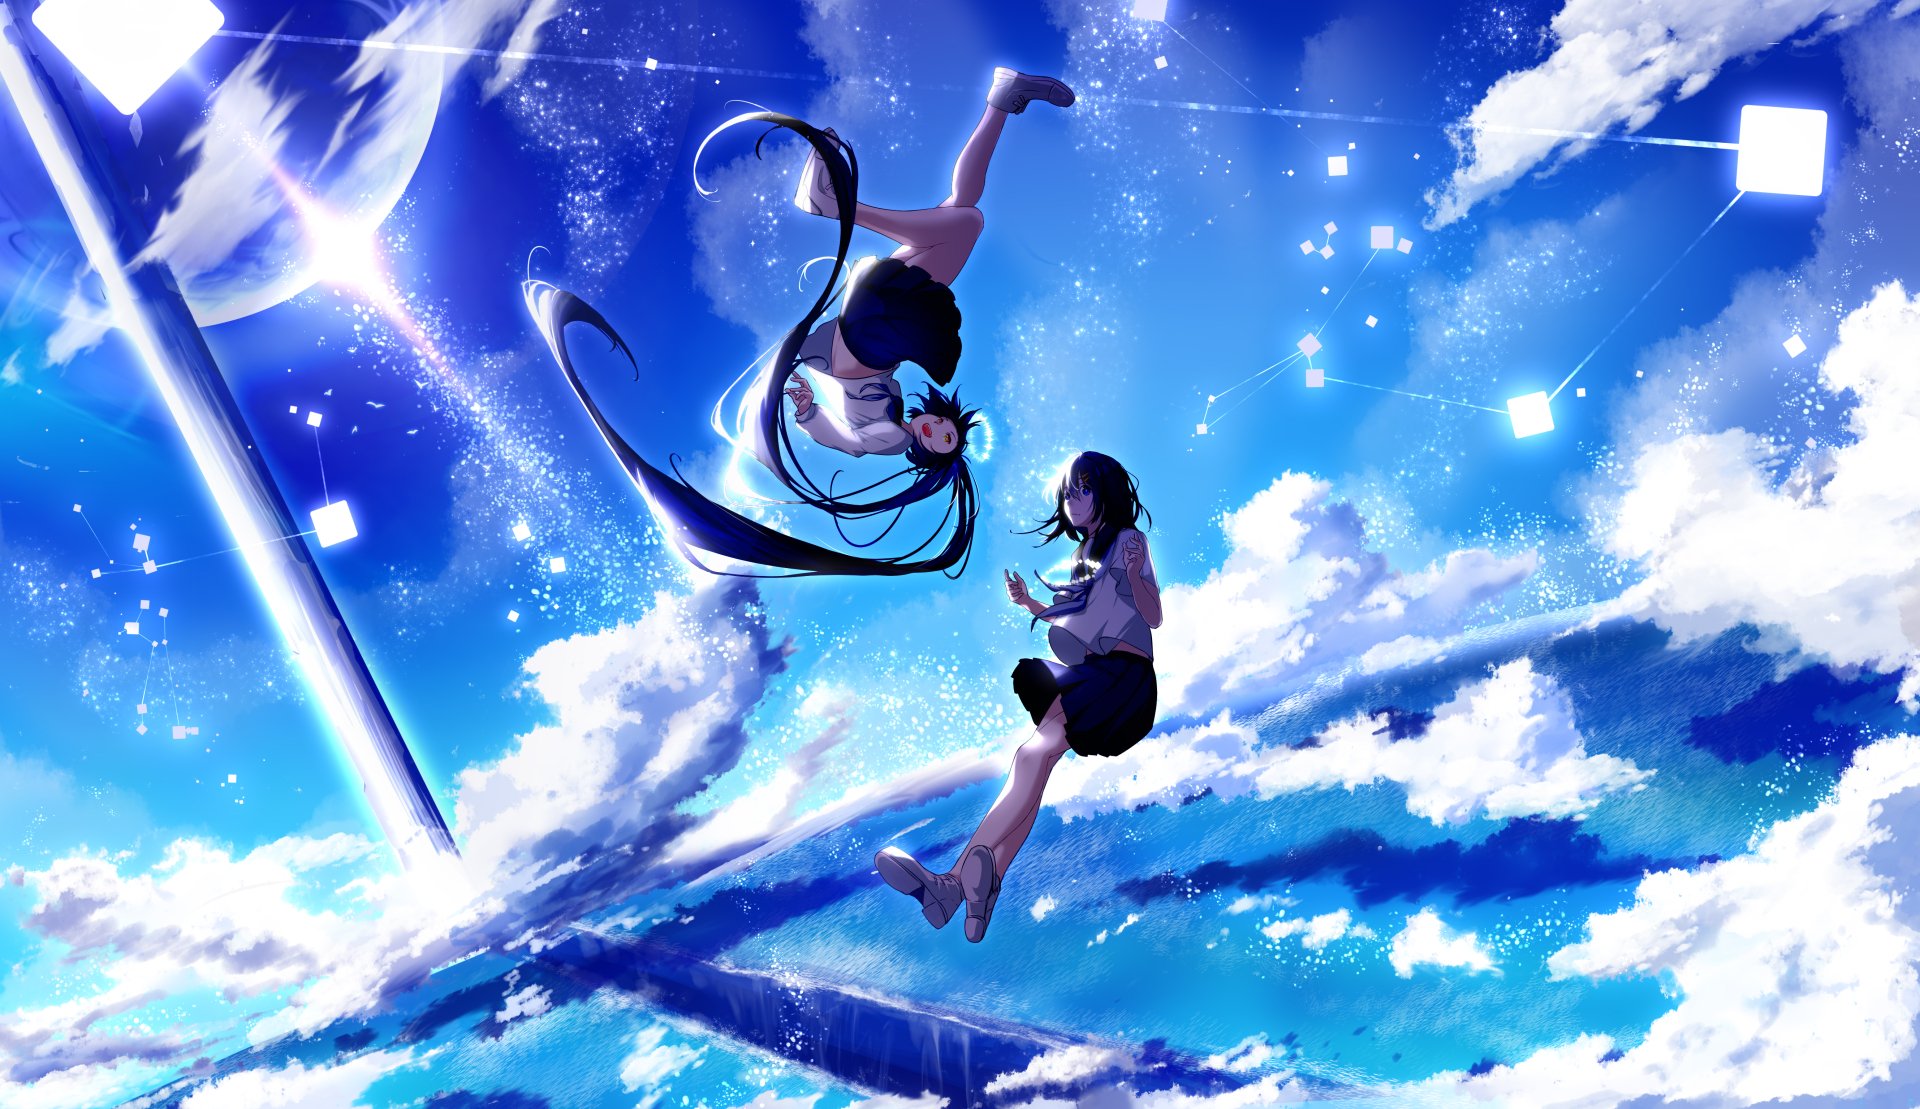 Download School Uniform Anime Girl Anime Girl 4k Ultra HD Wallpaper by 17才